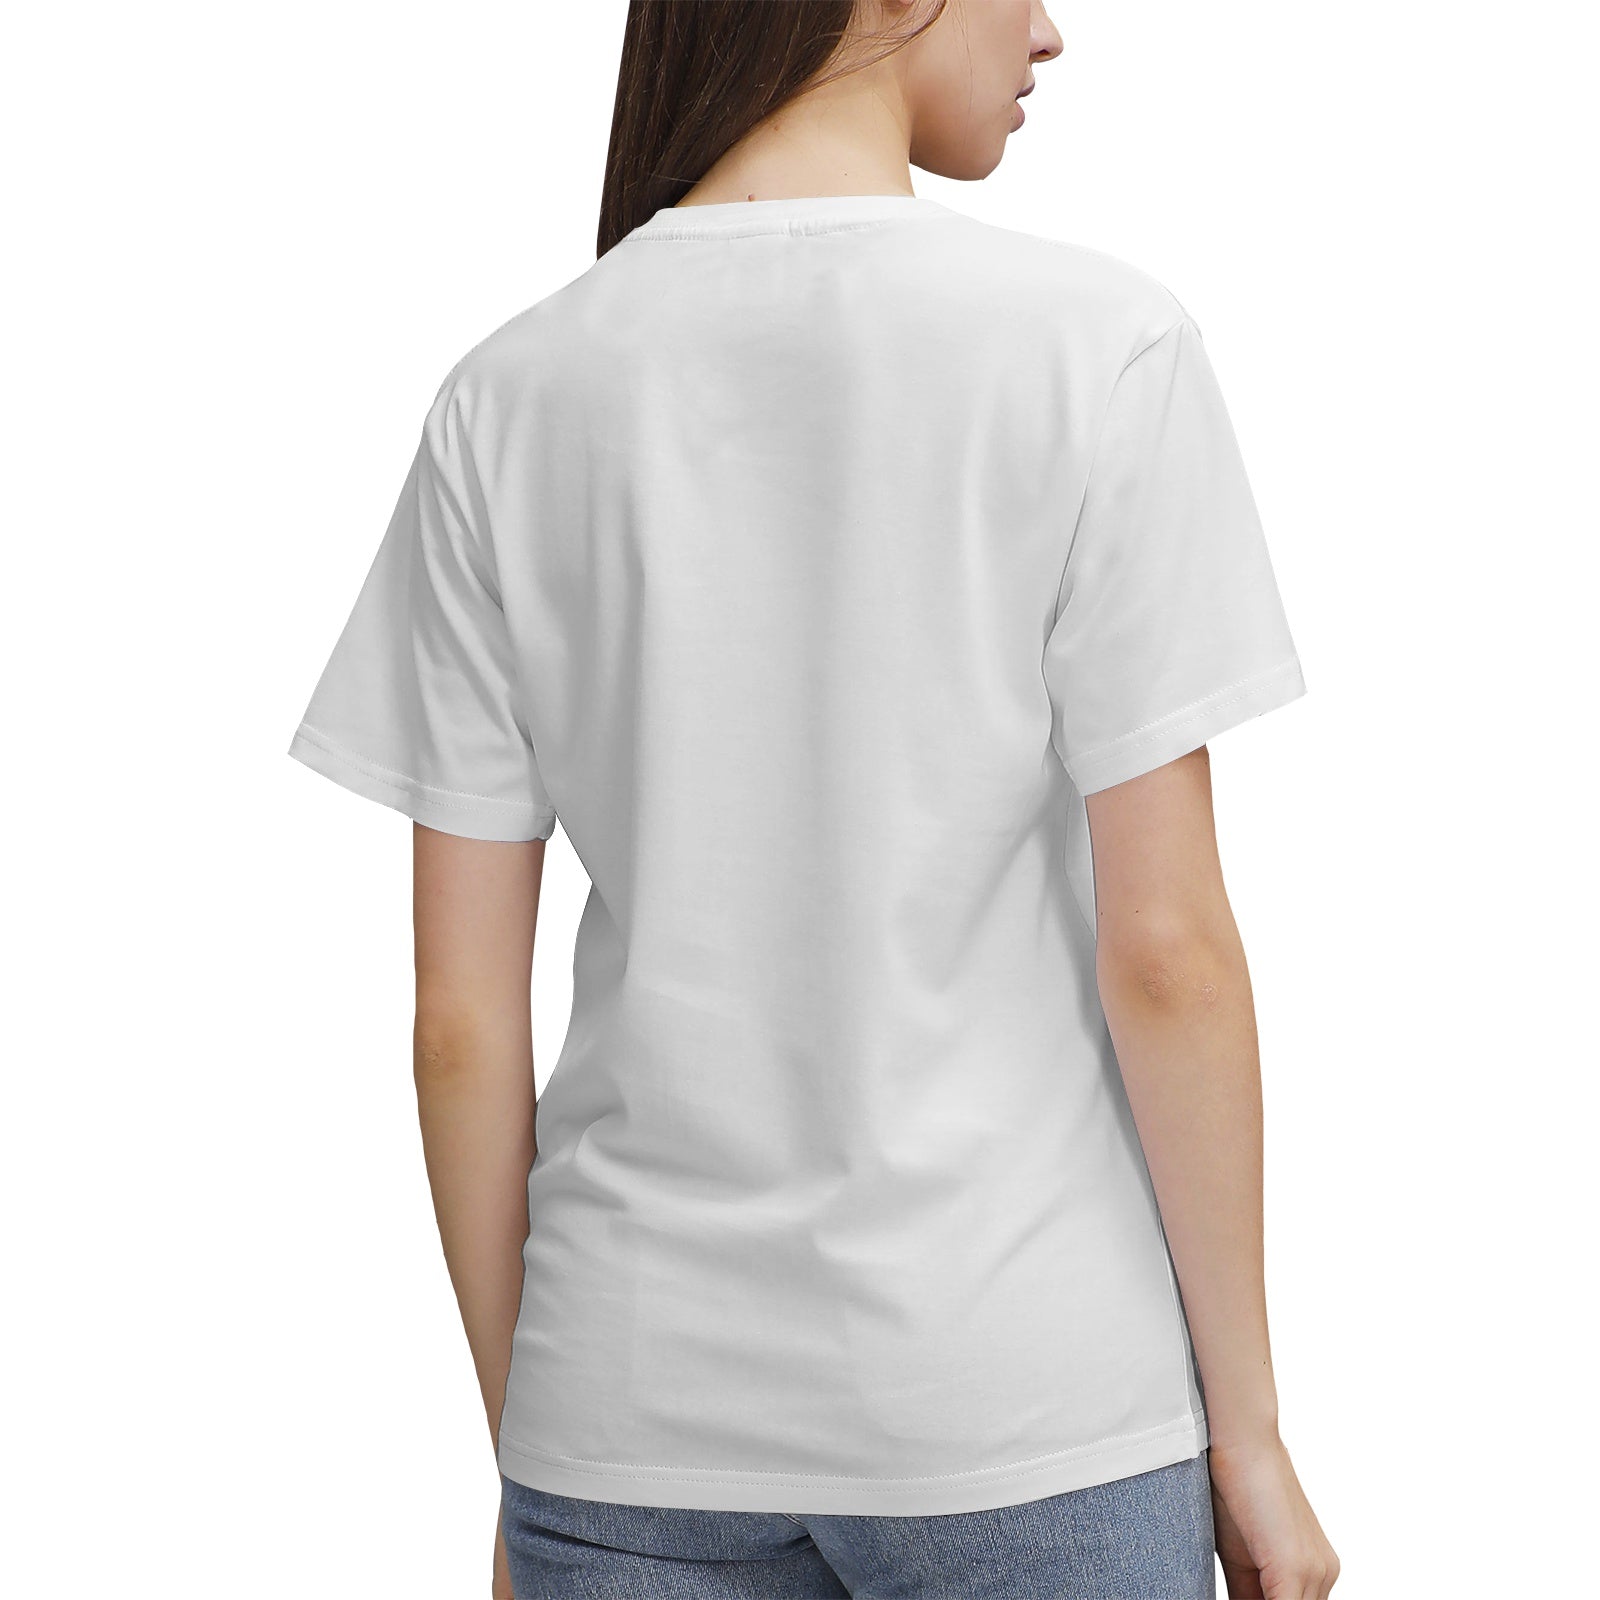 Nope Not Today Lazy Cat Women's Heavyweight Cotton T‑shirt - DromedarShop.com Online Boutique